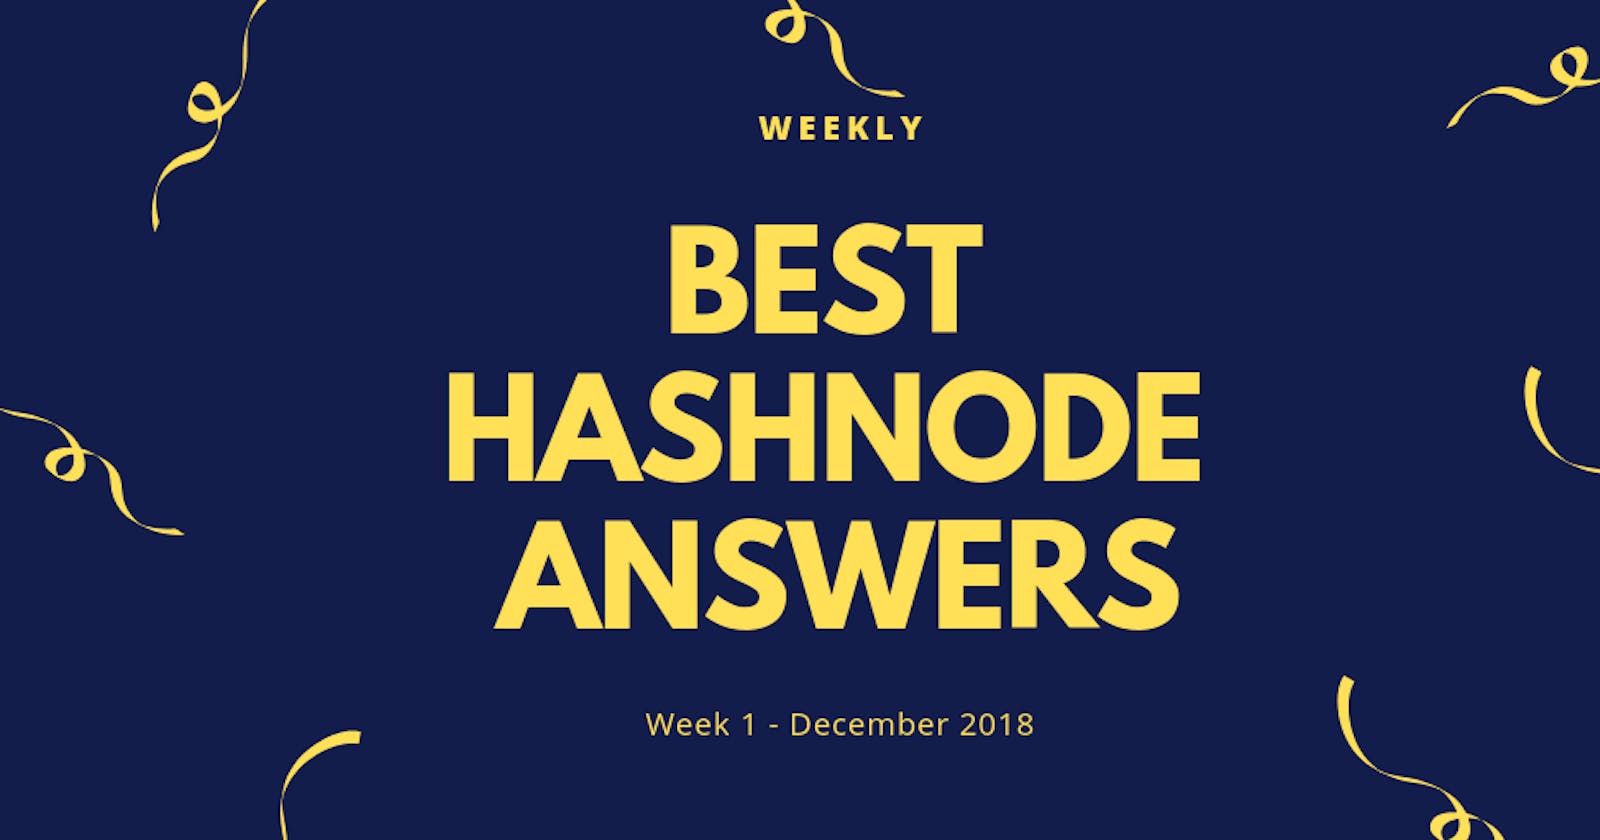 Best Hashnode Answers: December 2018 (Week 1)